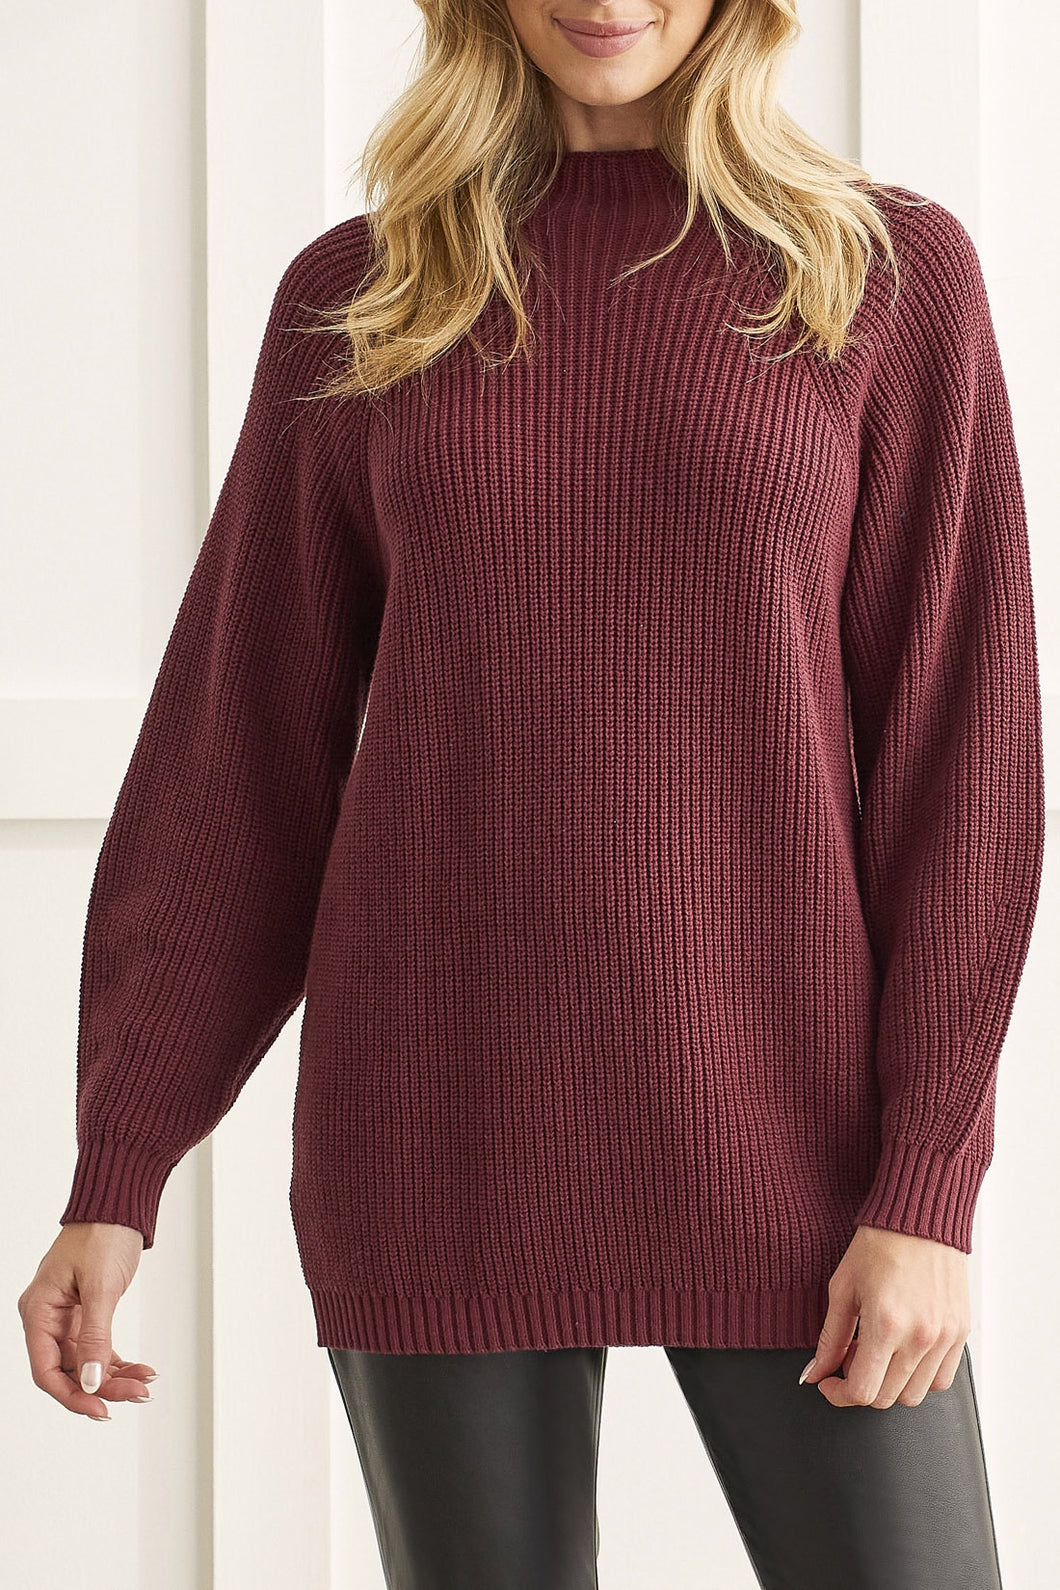 Long Red Wine Knit Mock Neck Sweater